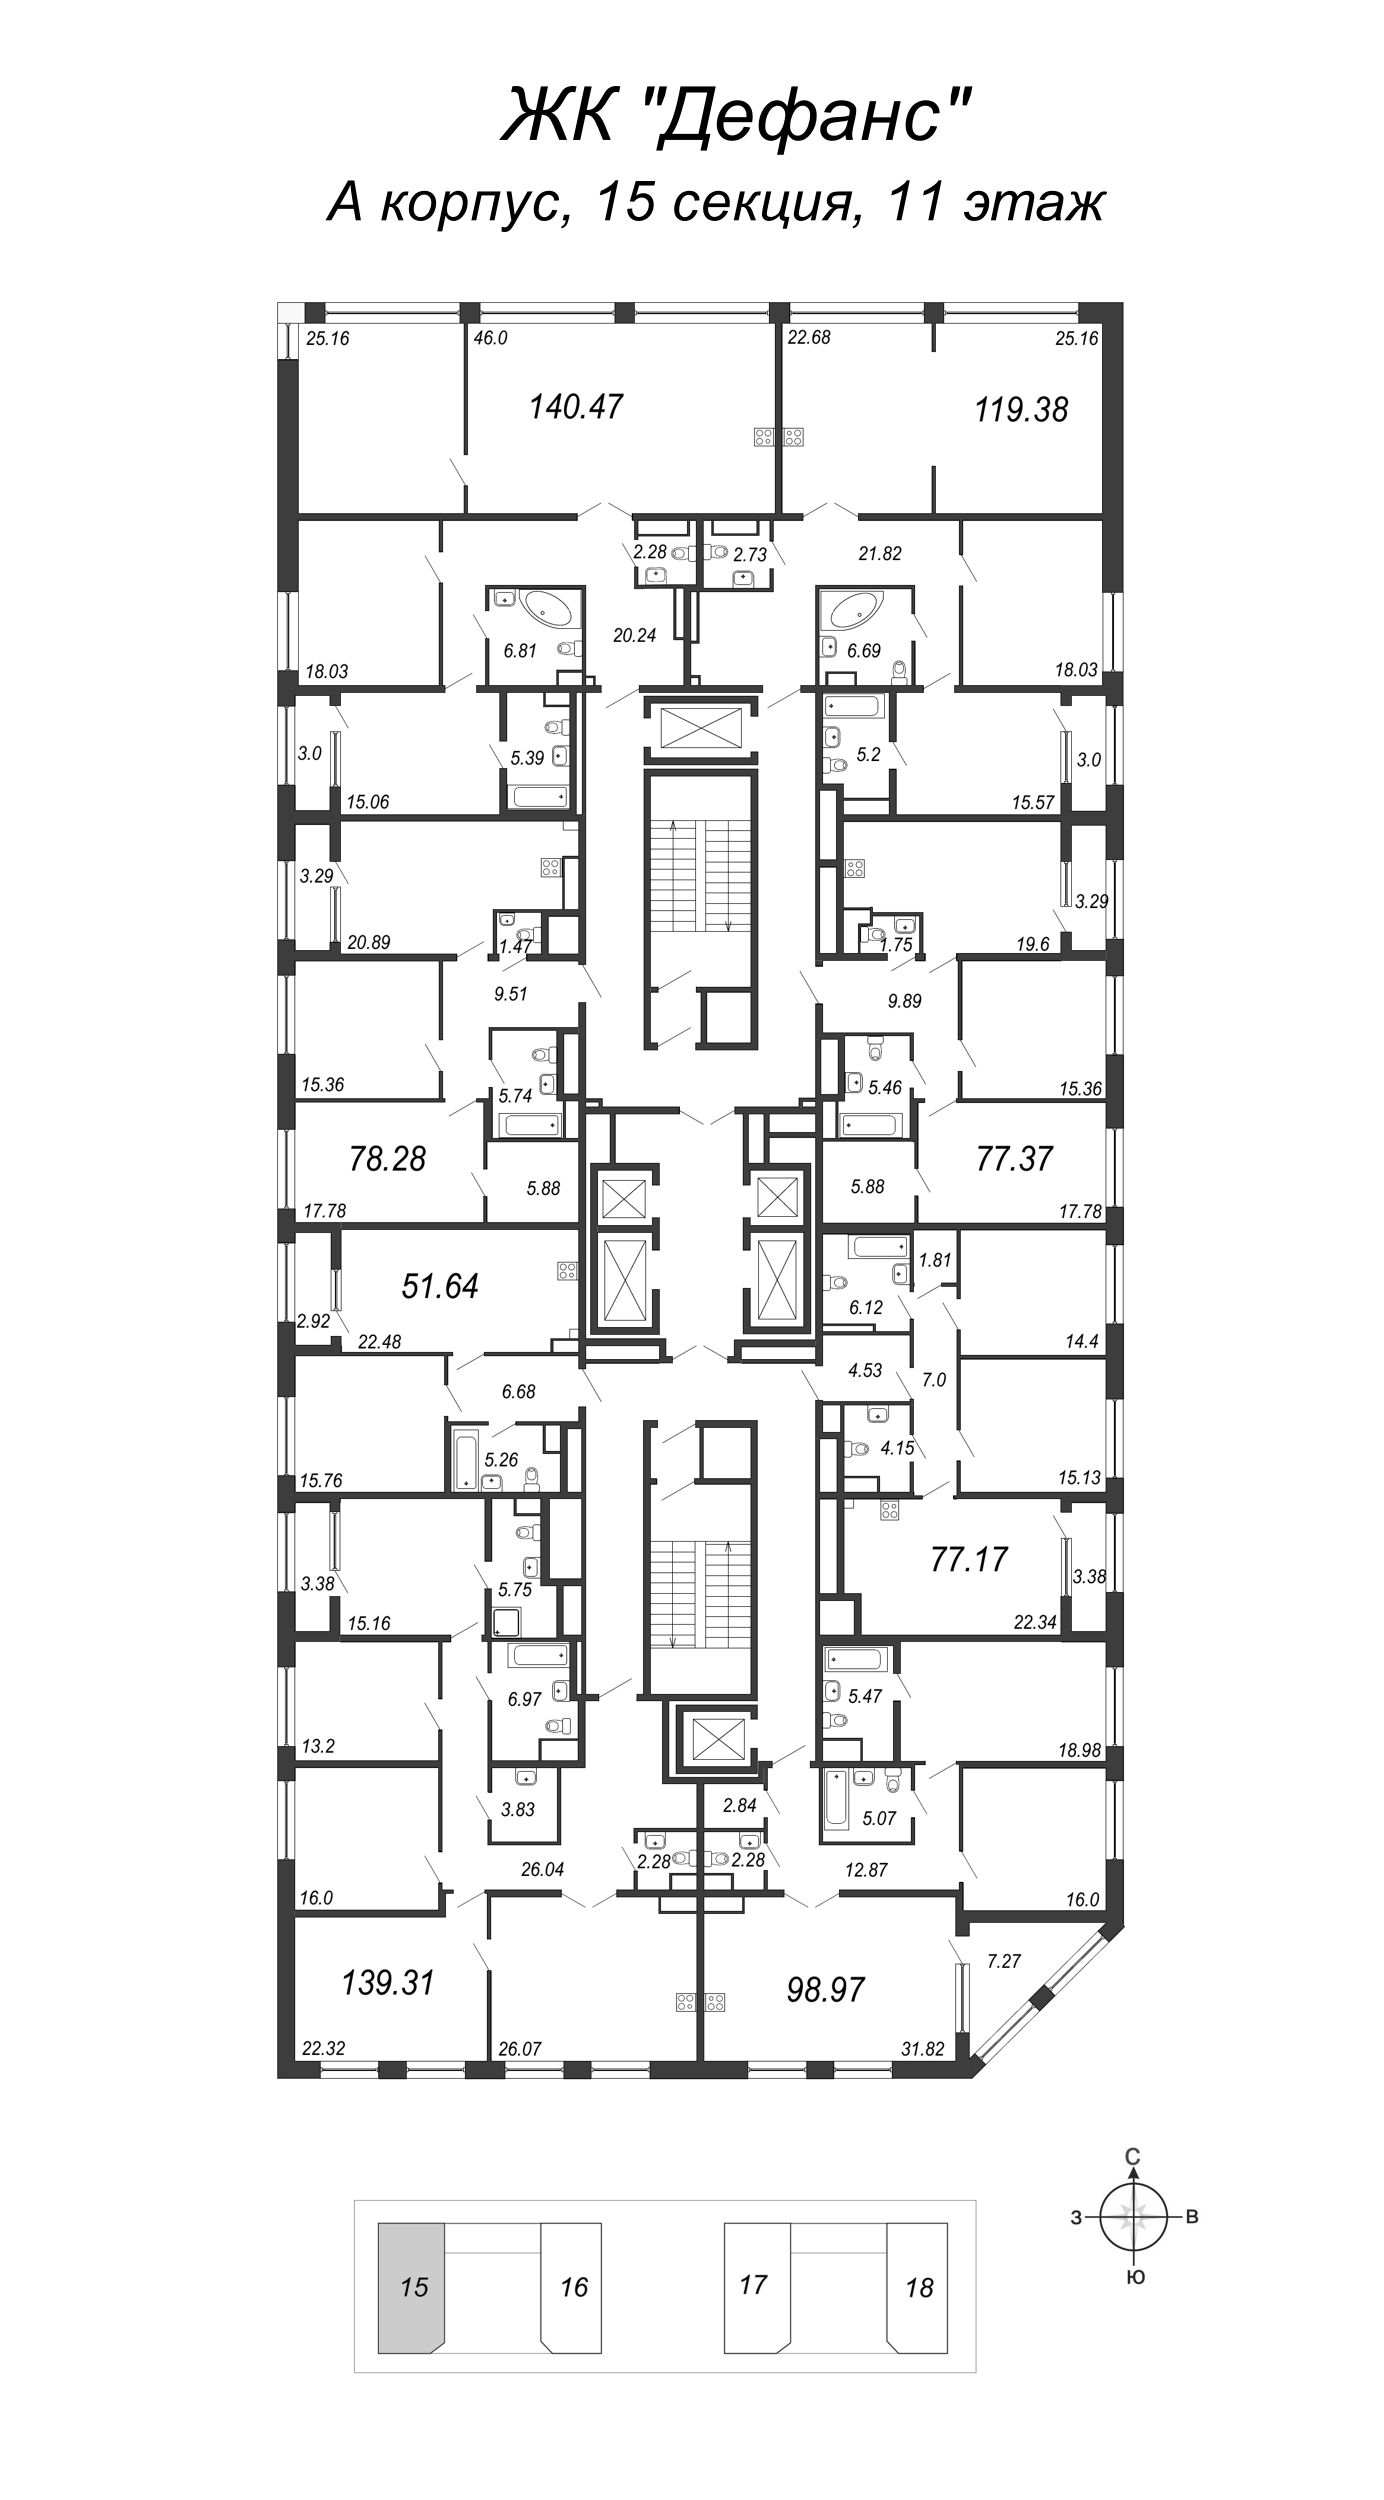 3-комнатная (Евро) квартира, 77.17 м² - планировка этажа